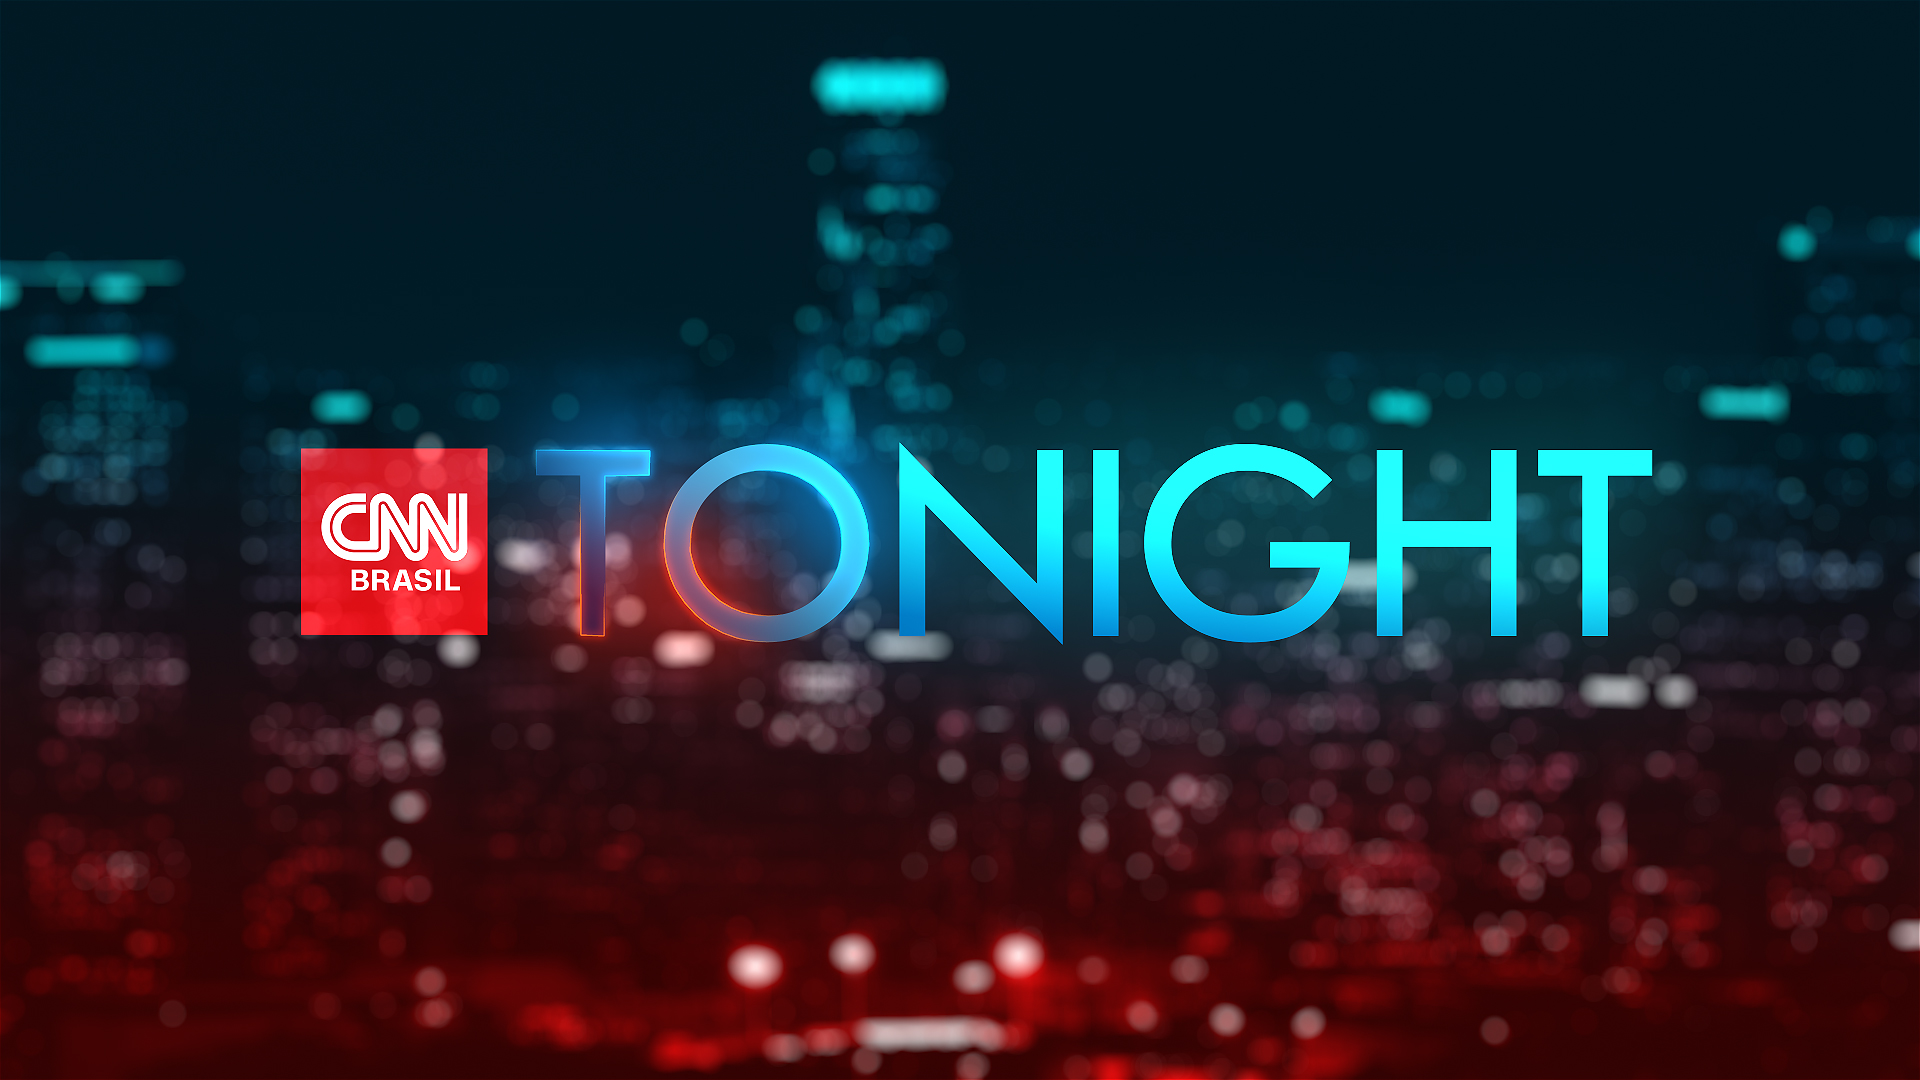 CNN Tonight